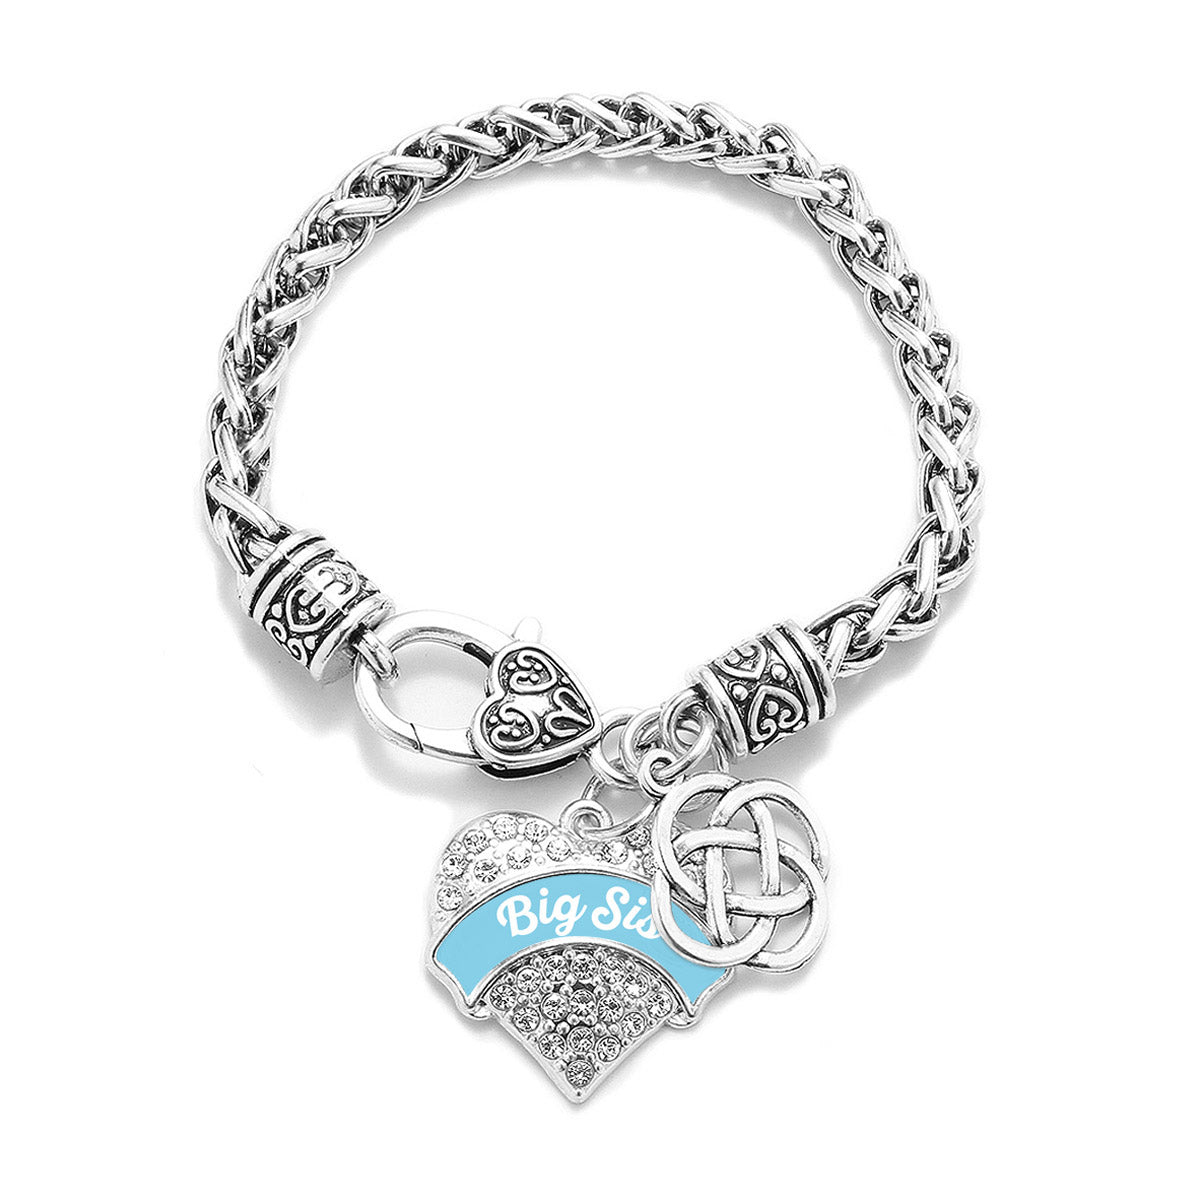 Silver Light Blue Big Sis Celtic Knot Pave Heart Charm Braided Bracelet